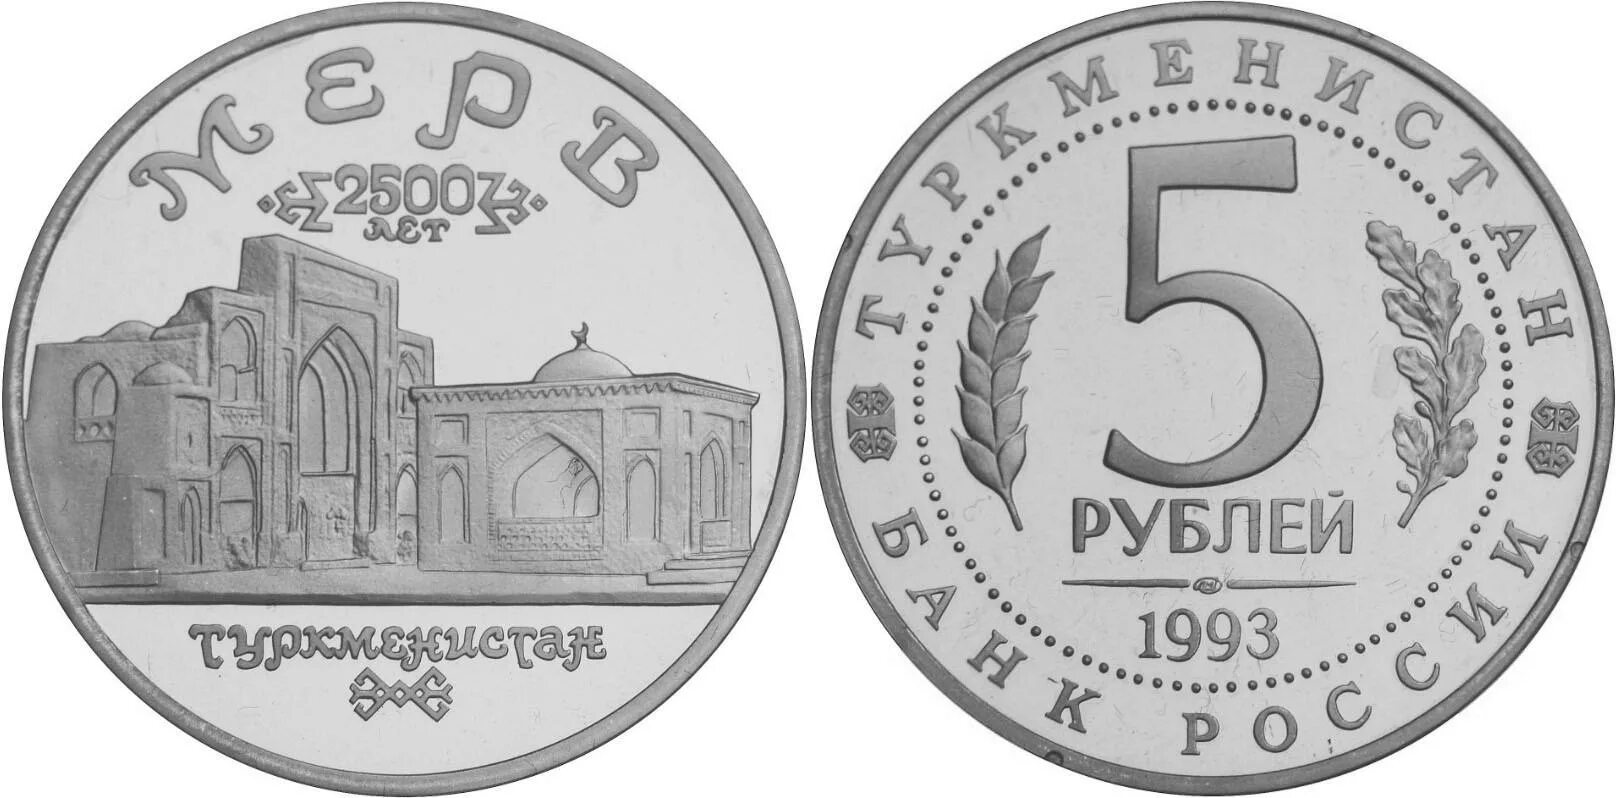 5 рублей 19 года. Монета 5 руб. 1993. 5 Рублей 1993. Монета 5 рублей 1993. Монета 5 рублей 1993 года.